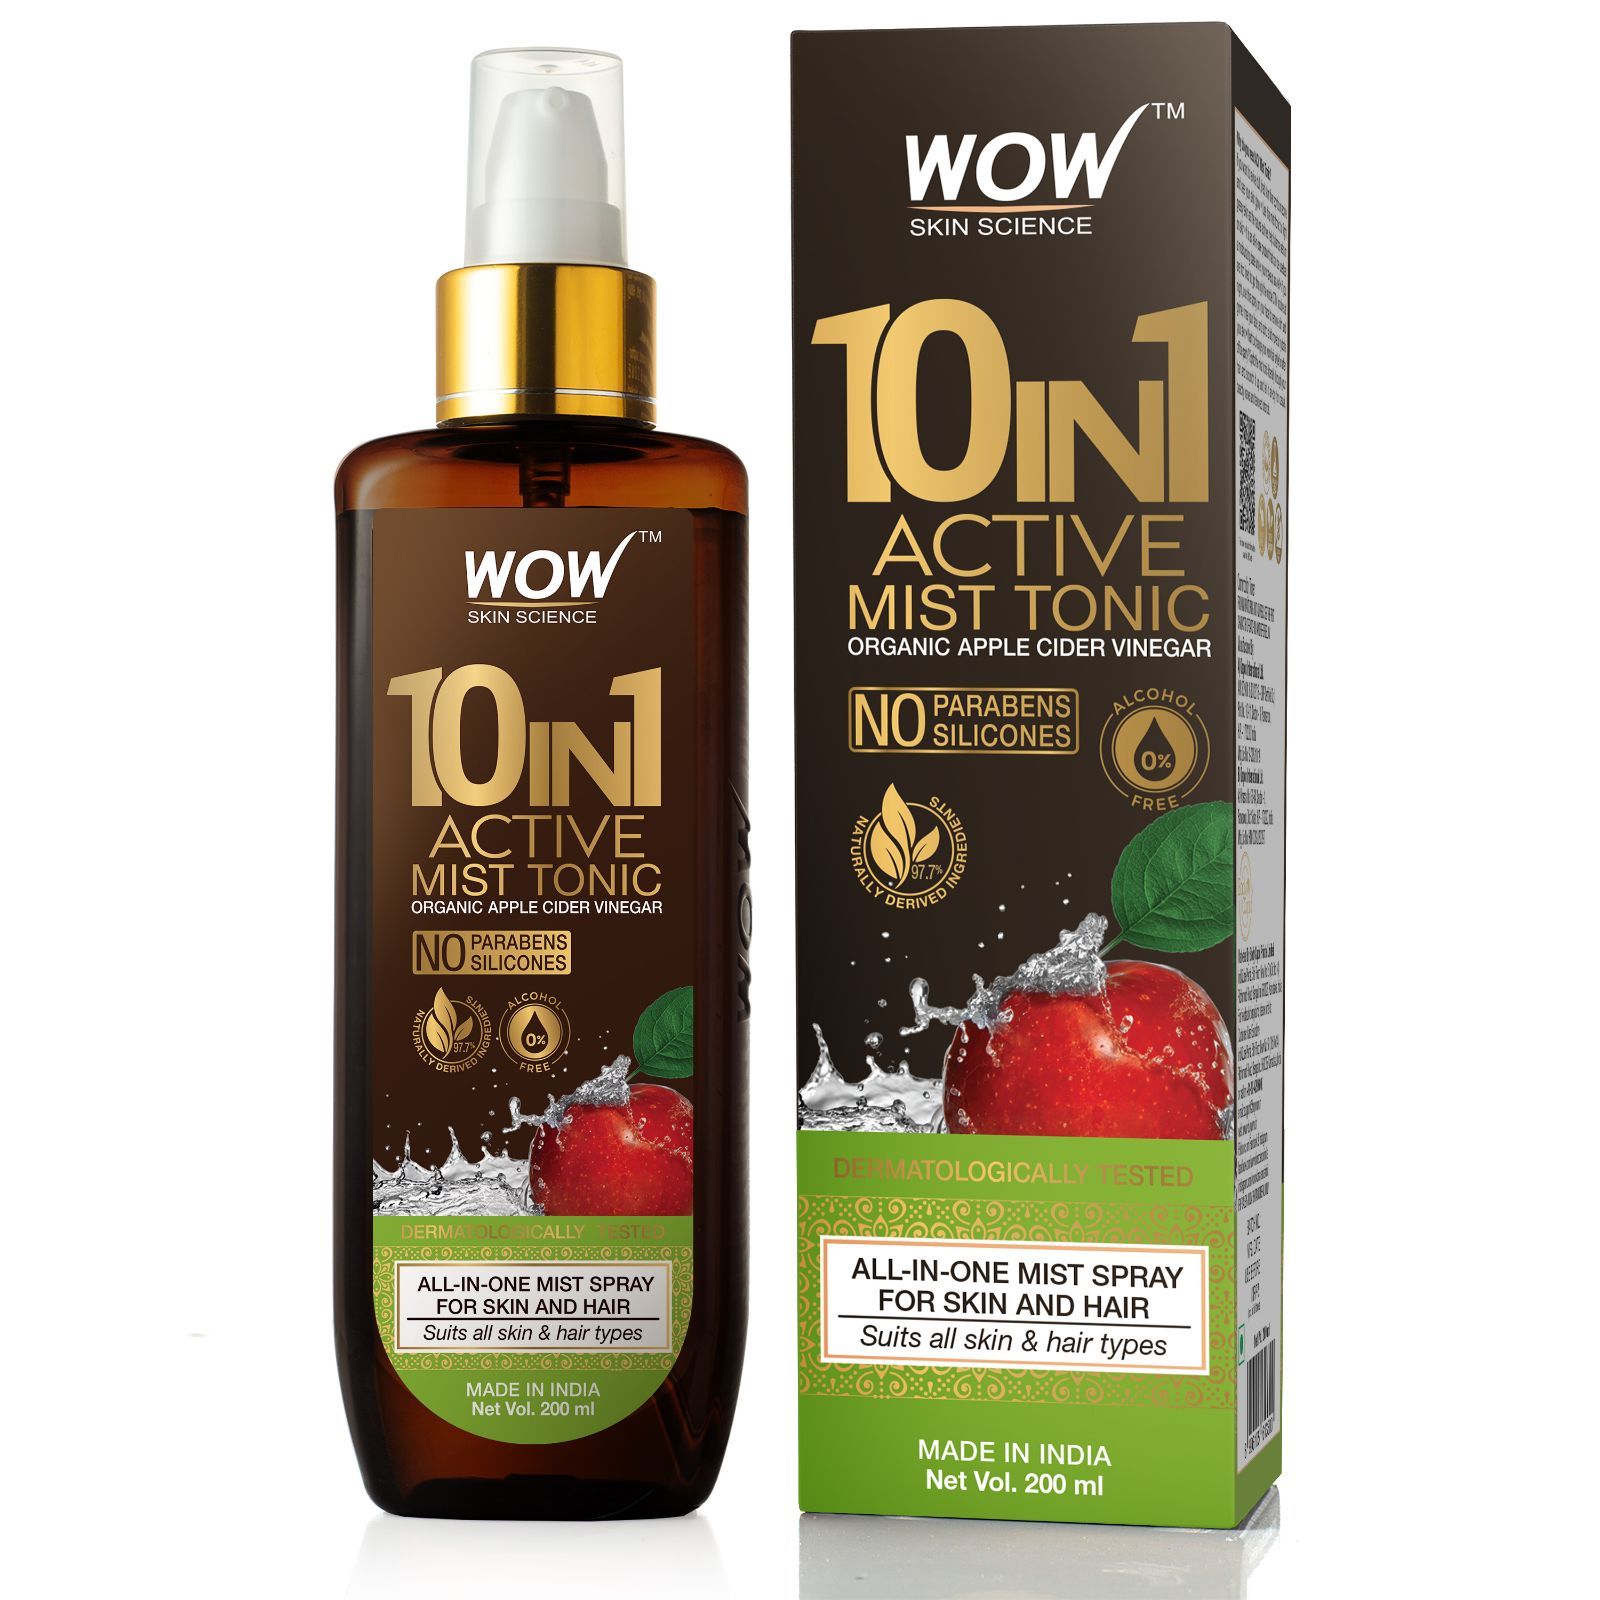 WOW Skin Science 10-In-1 Active Mist Tonic Organic Apple Cider Vinegar